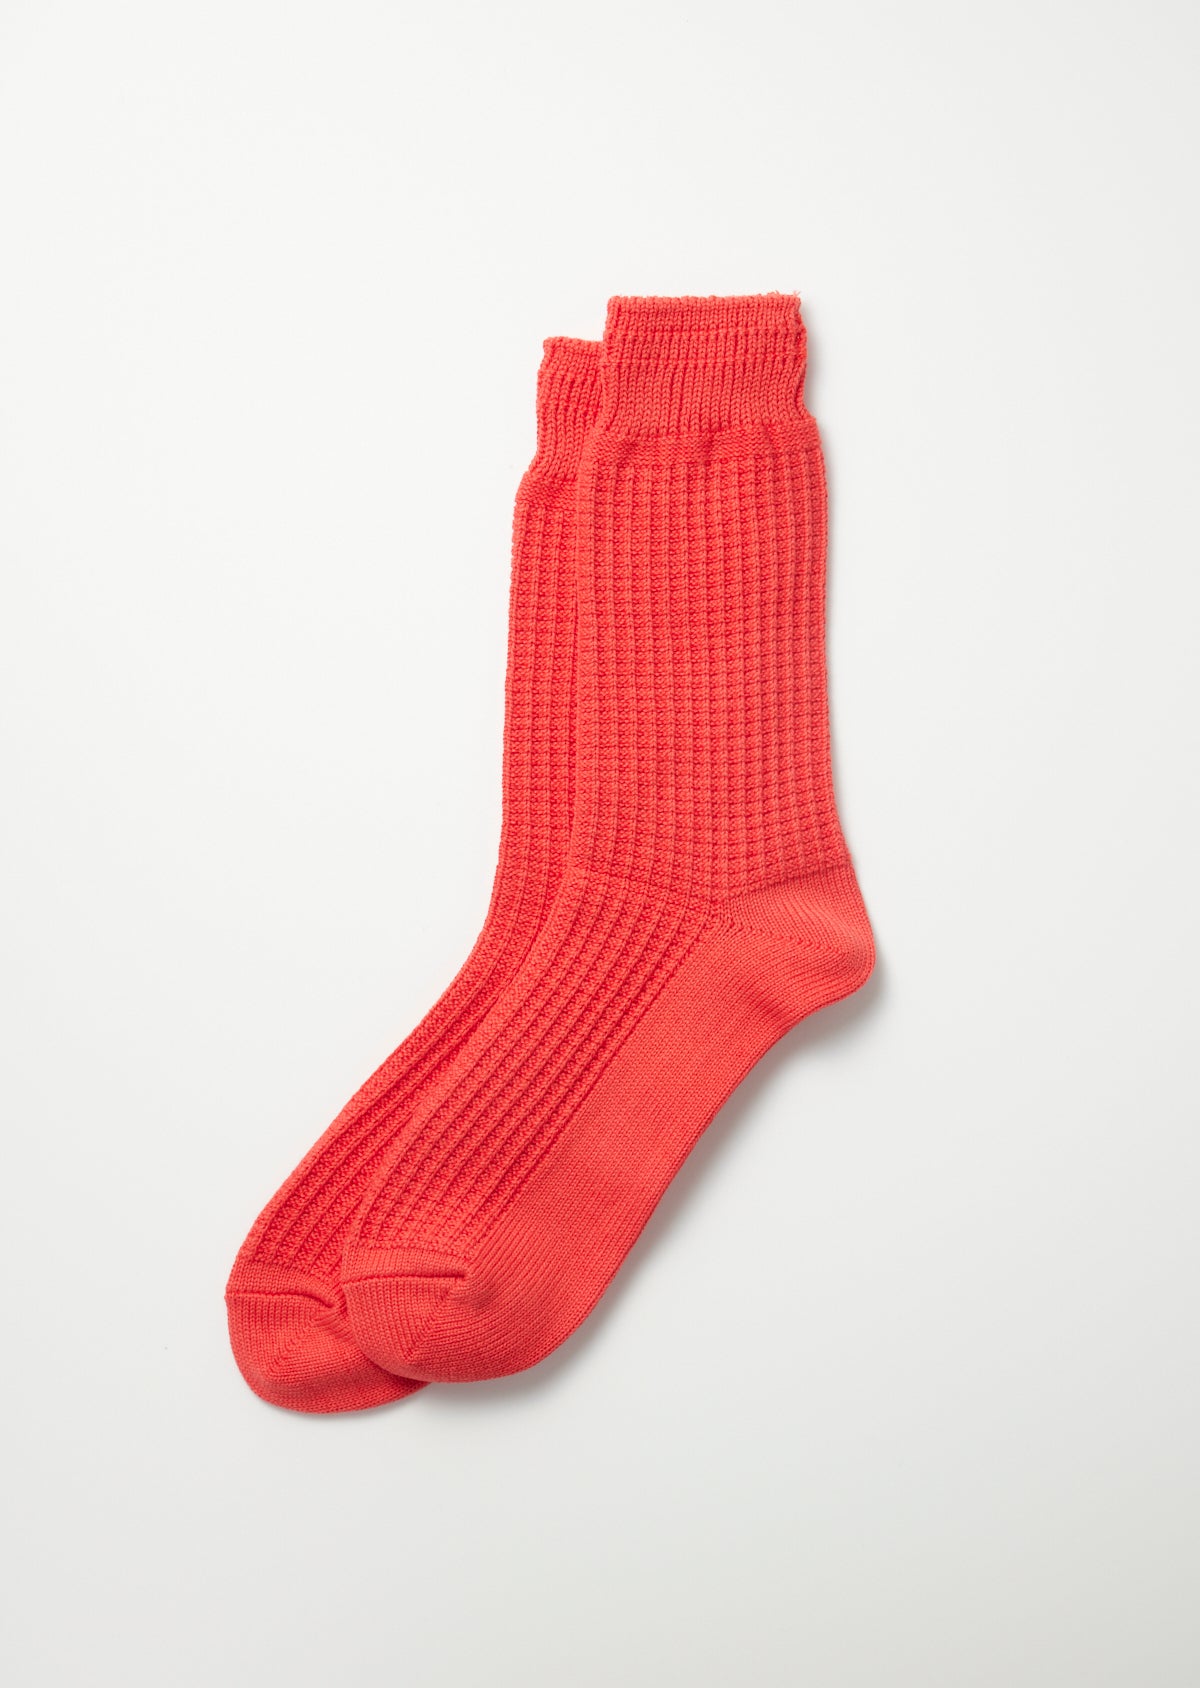 Waffel Socken - coral red